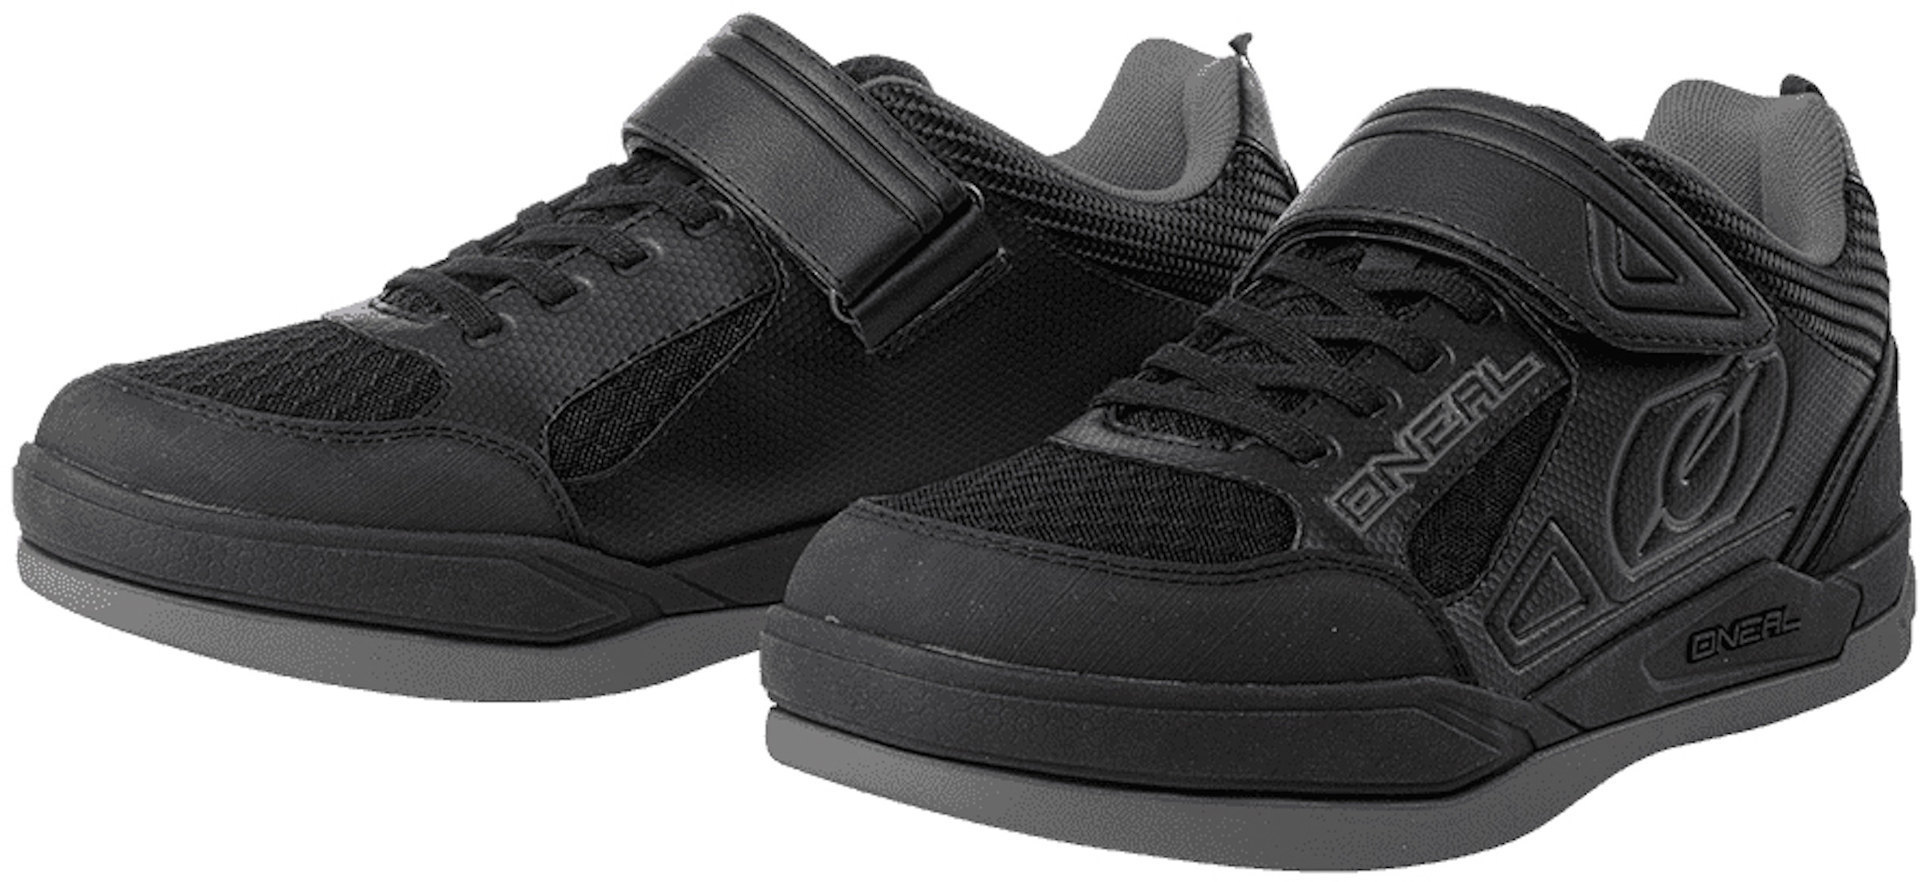 Oneal Sender Flat Schuhe, schwarz-grau, Gre 42, schwarz-grau, Gre 42